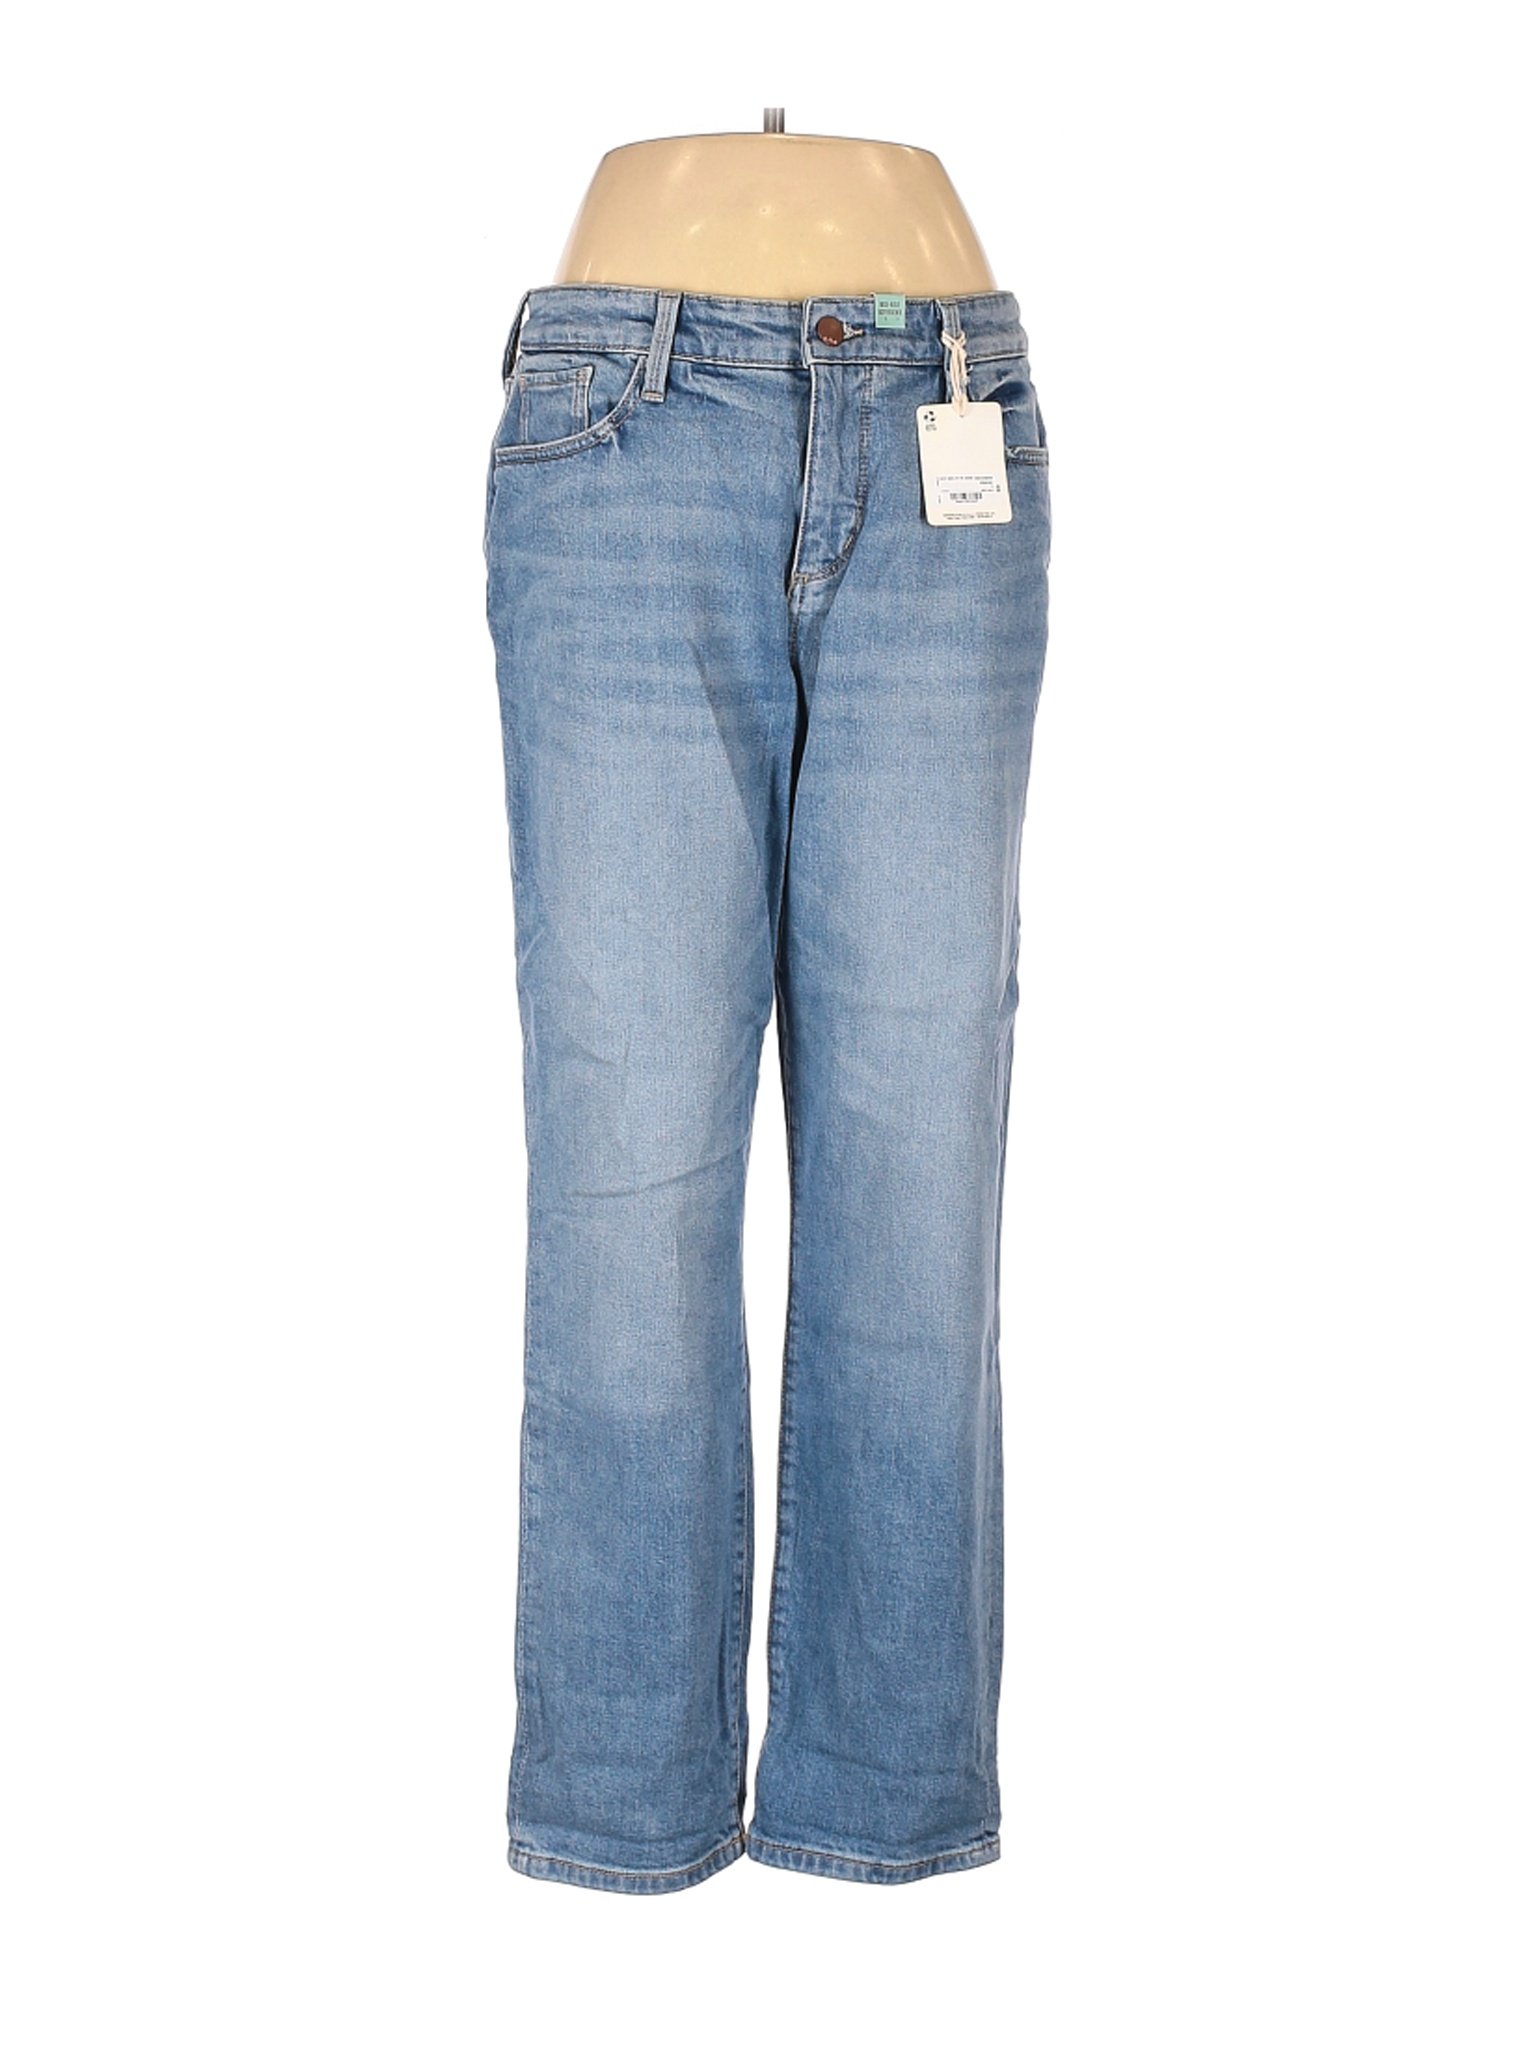 A.n.a. A New Approach Women Blue Jeans 8 | eBay